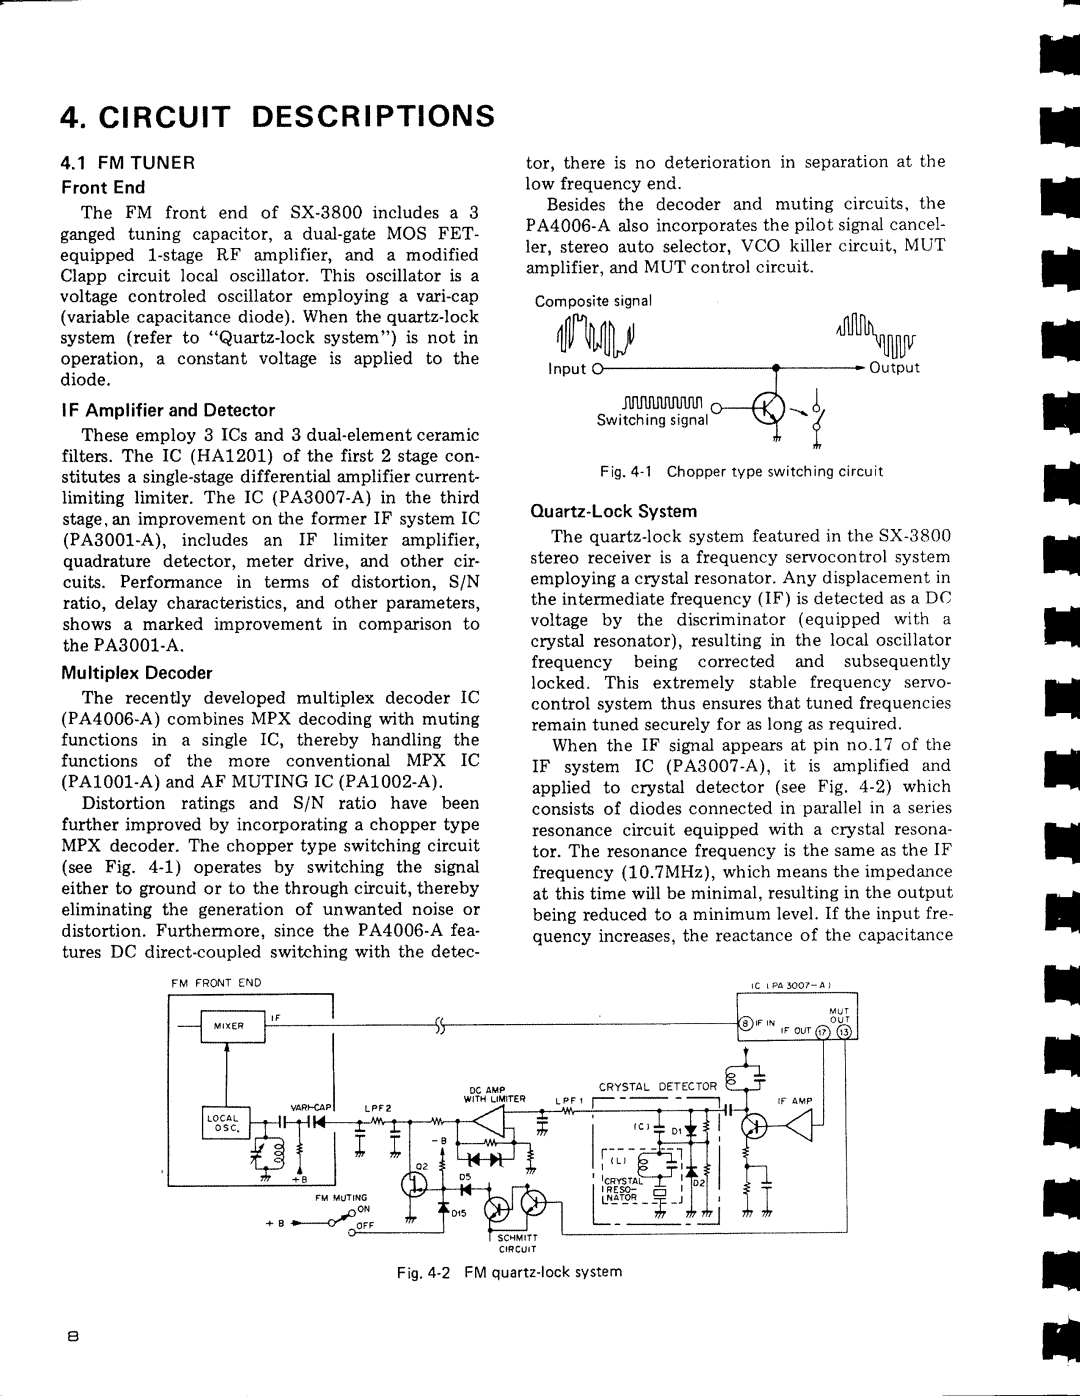 Pioneer SX-3800 manual dhllL, Circuitdescriptions 